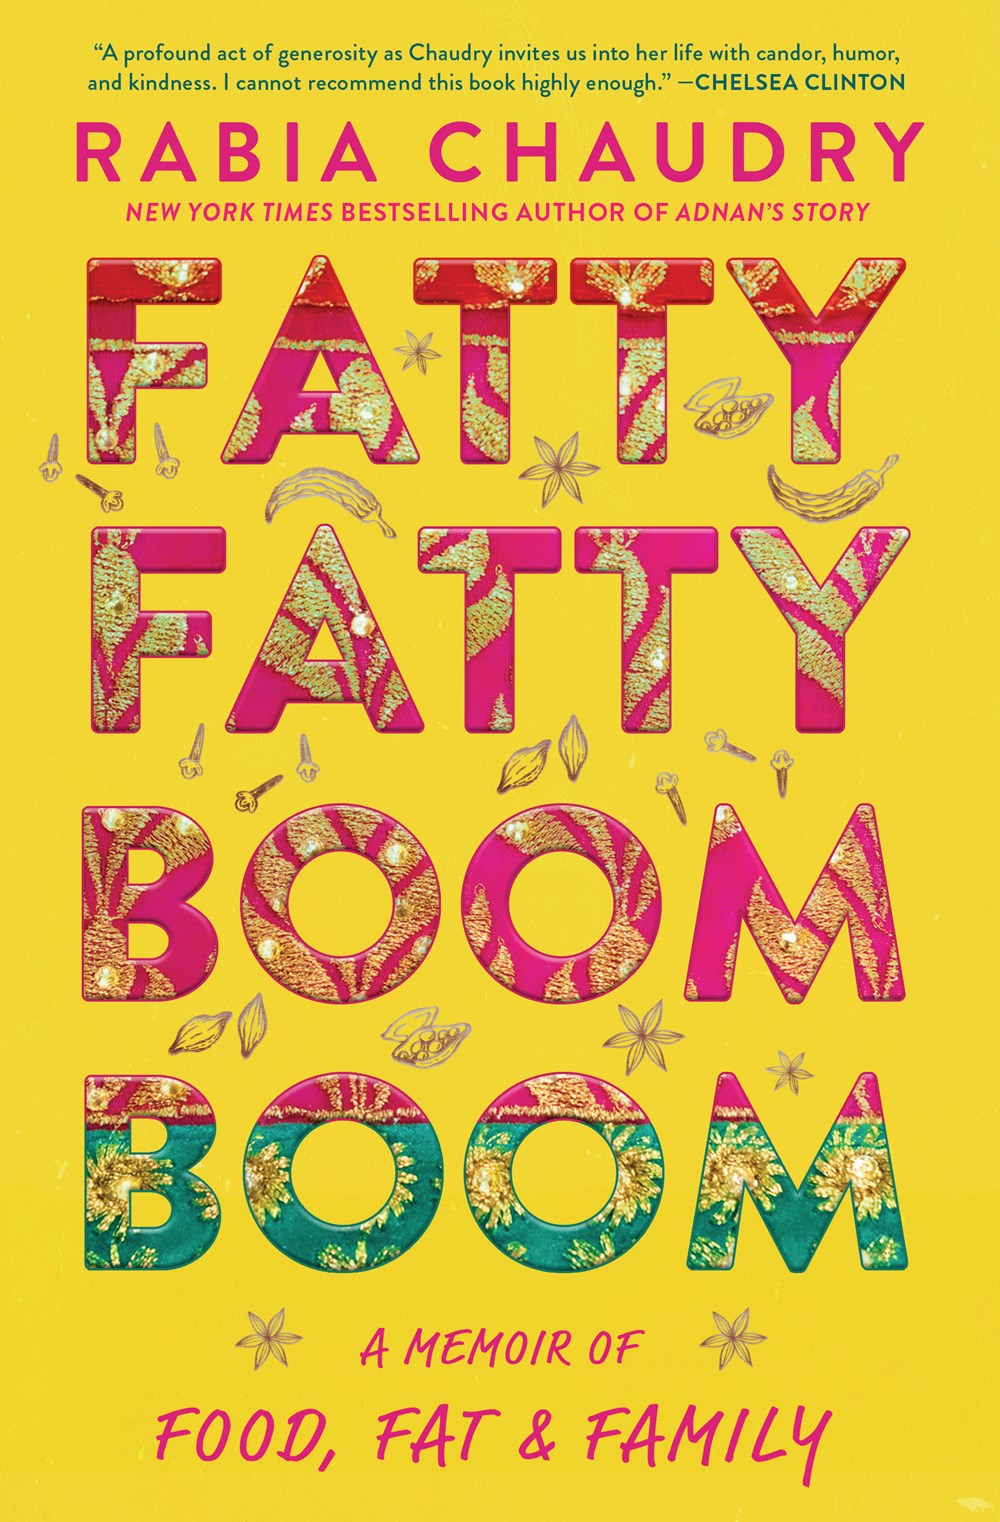 Fatty Fatty Boom Boom: A Memoir of Food, Fat, and Family